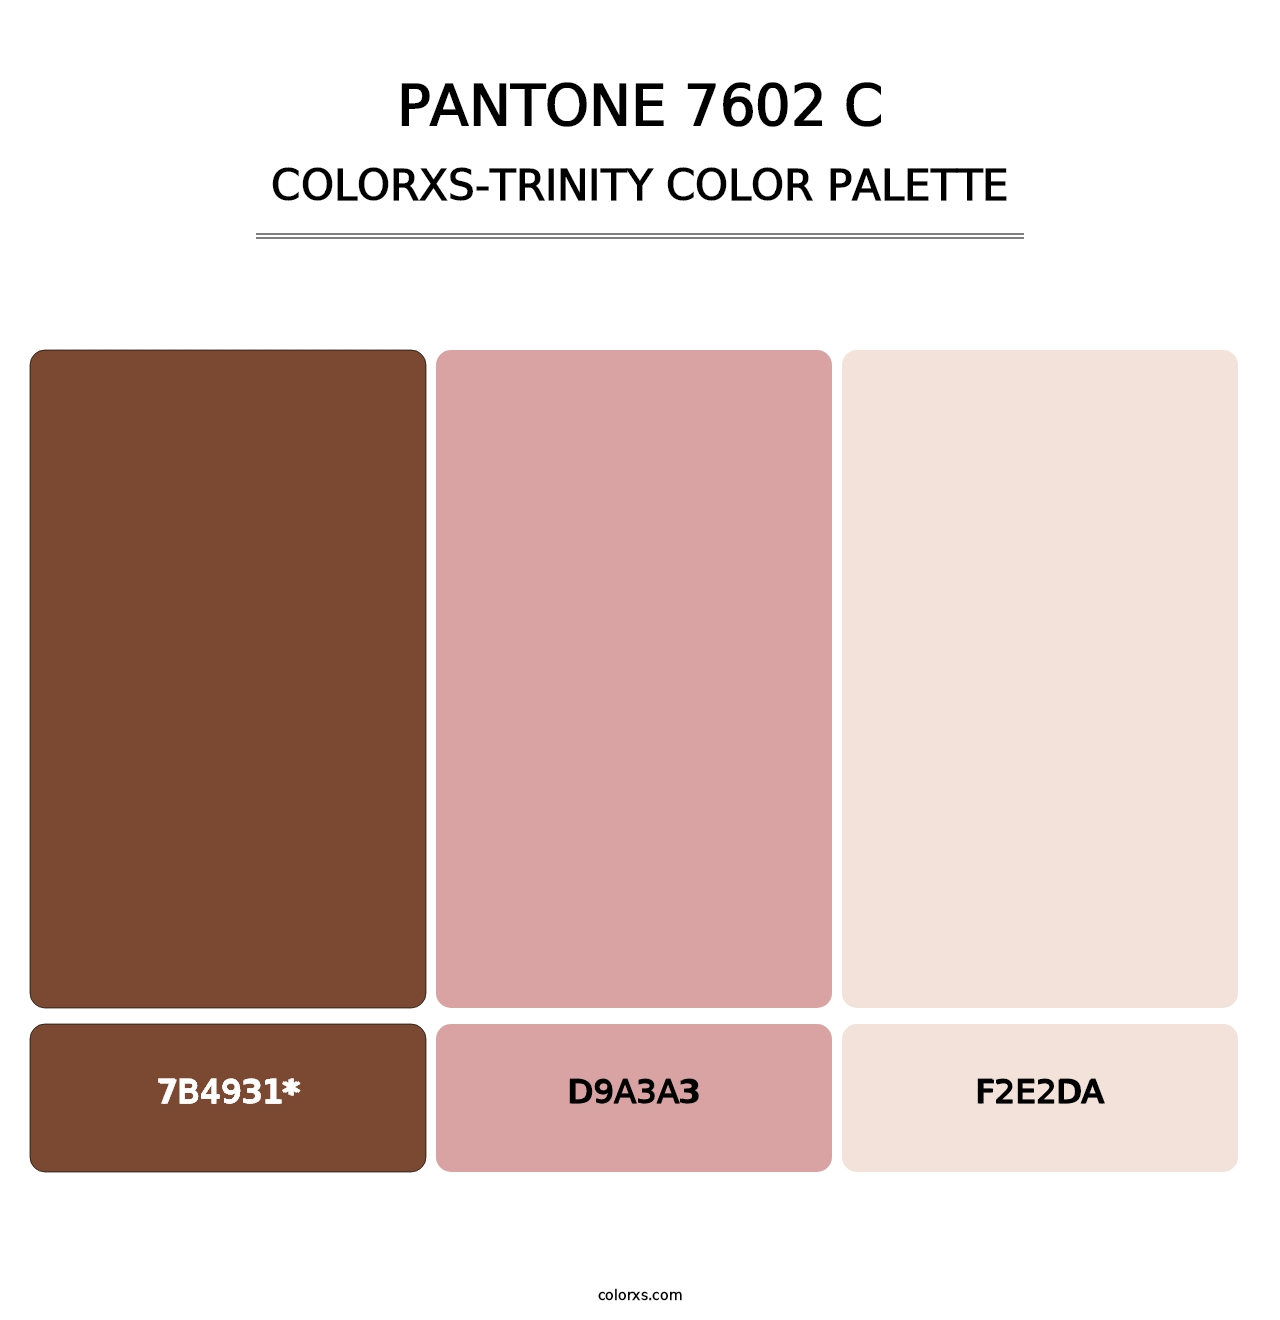 PANTONE 7602 C - Colorxs Trinity Palette